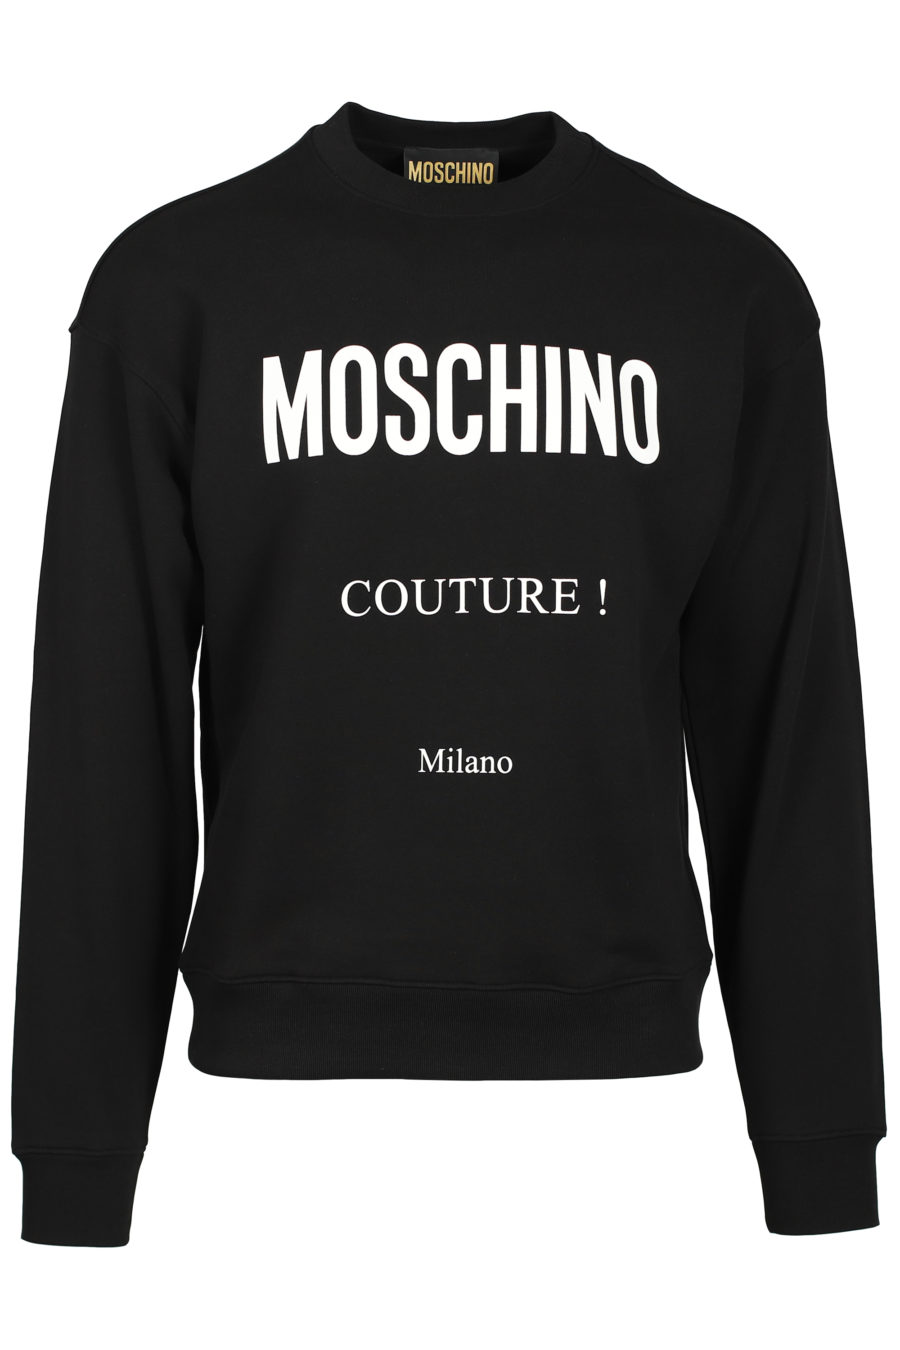 Sudadera negra logo "Couture Milano" - IMG 2578